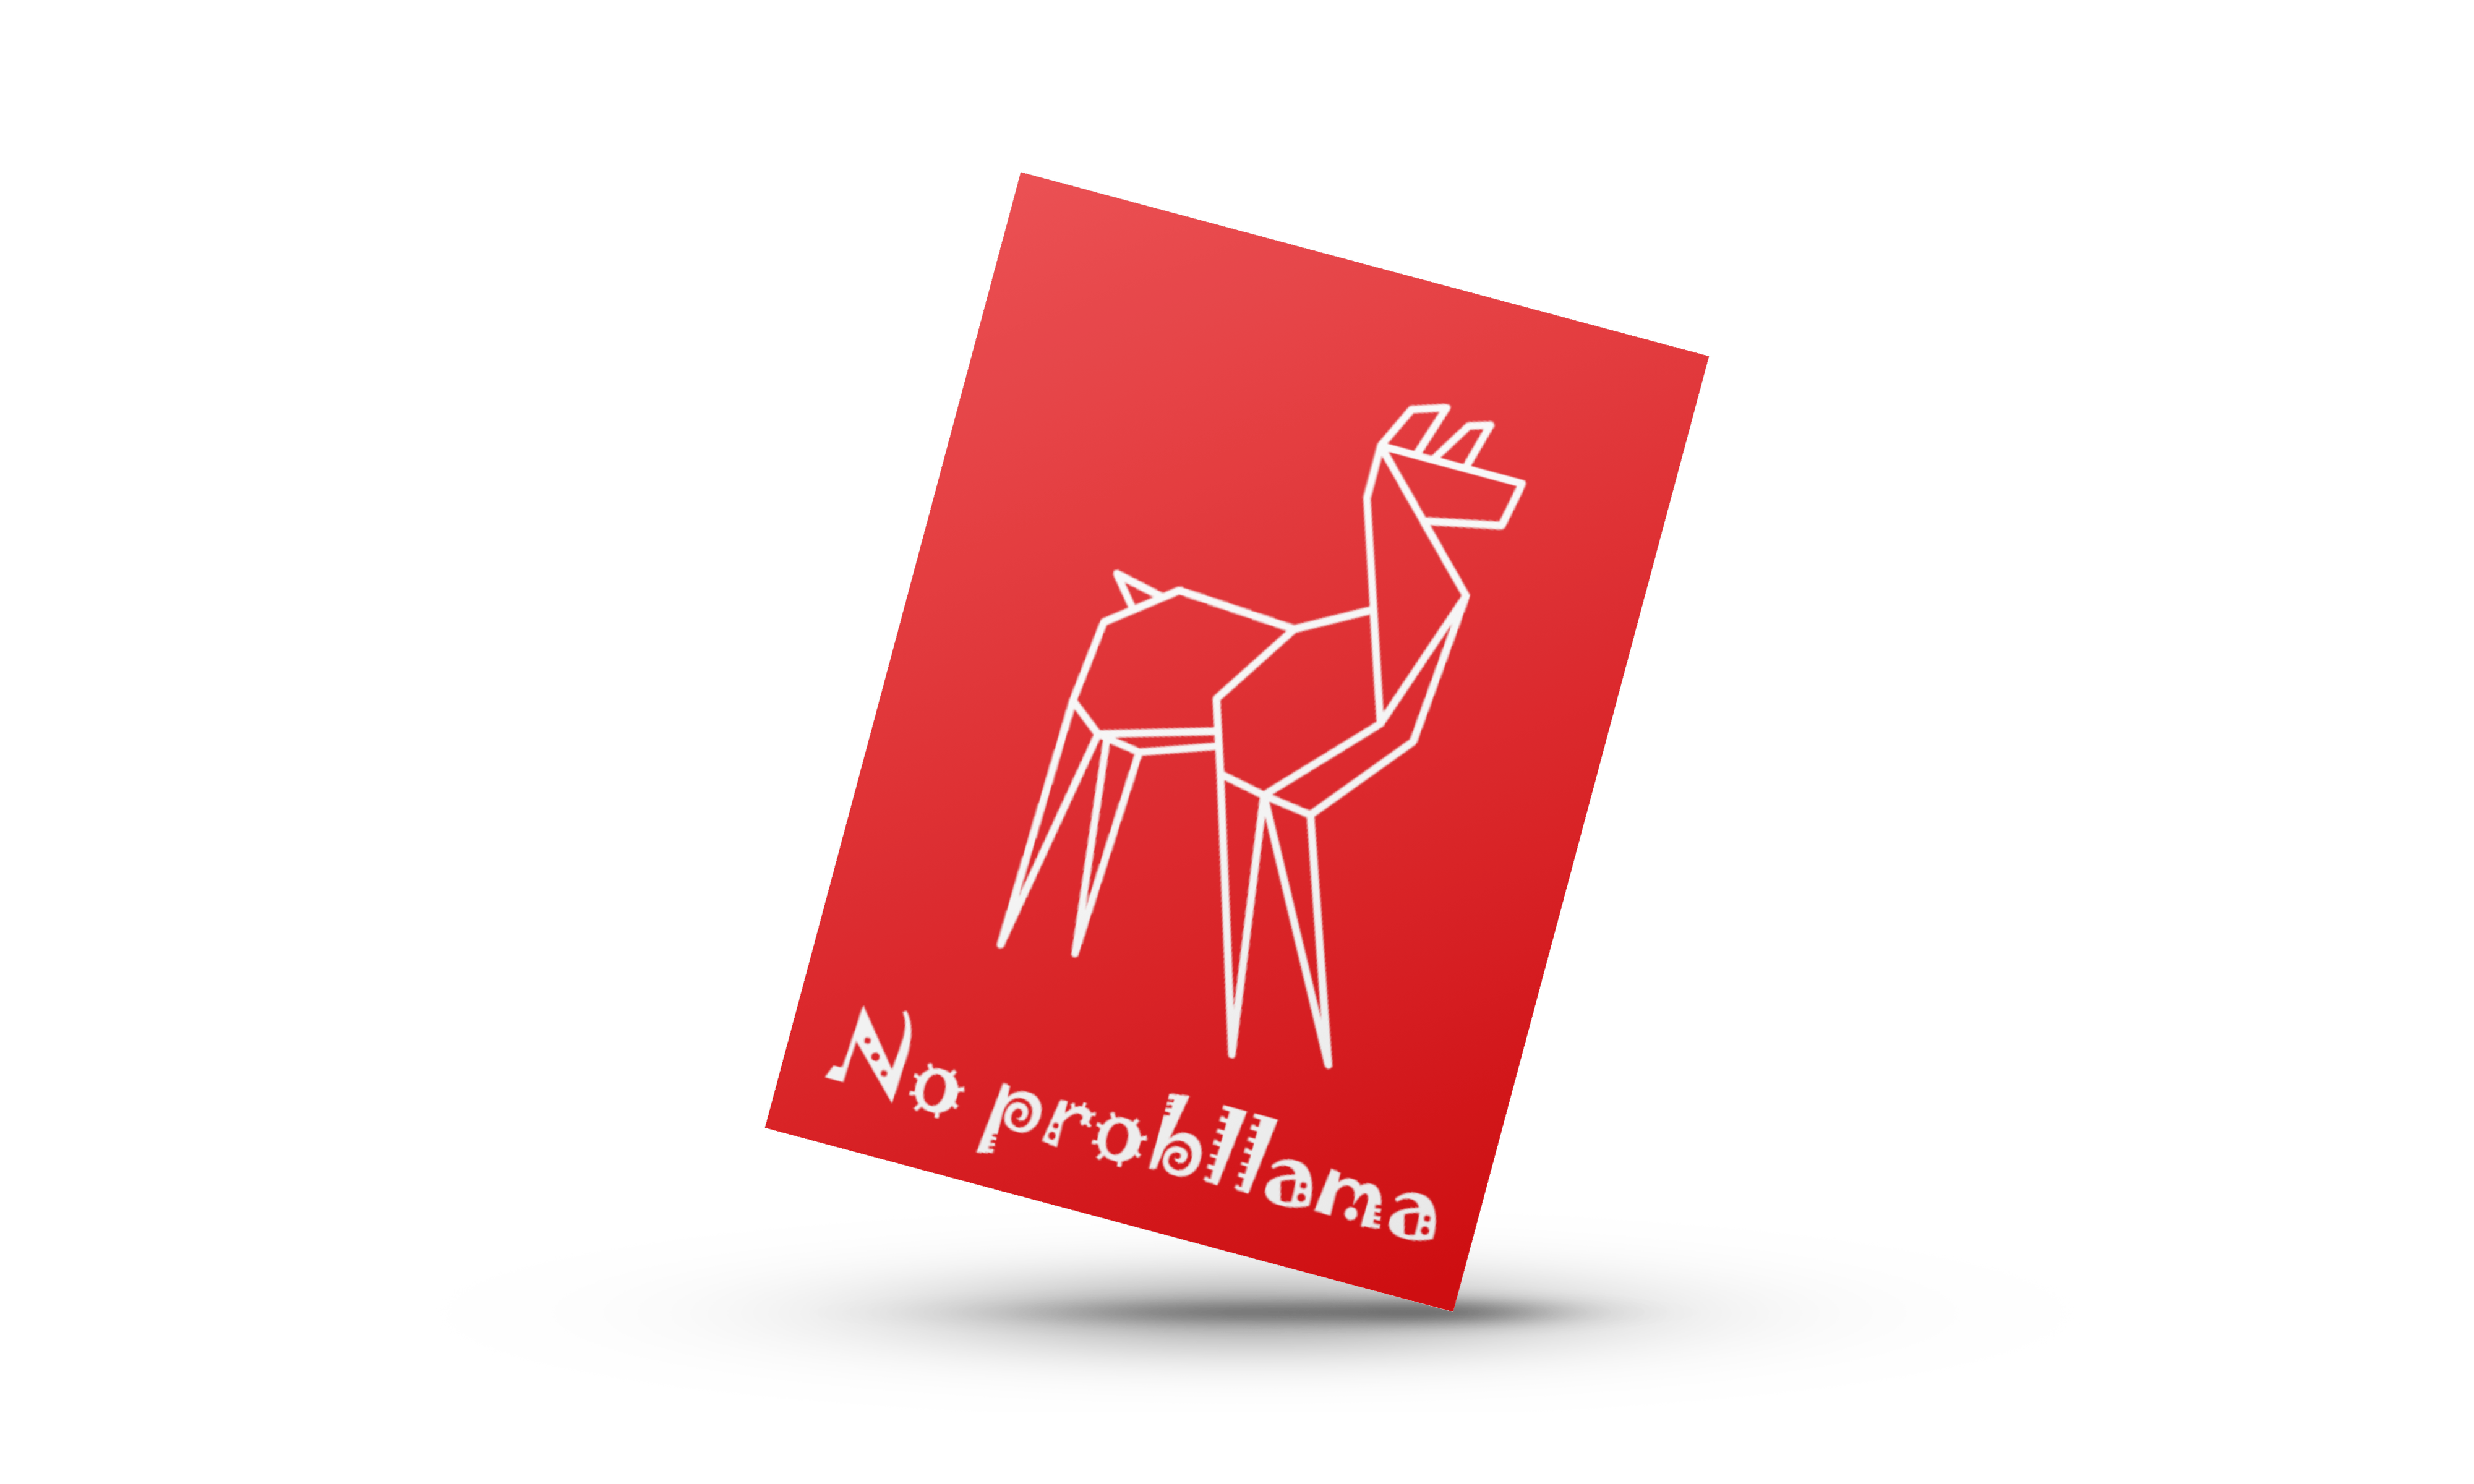 No Probllama - Minikort